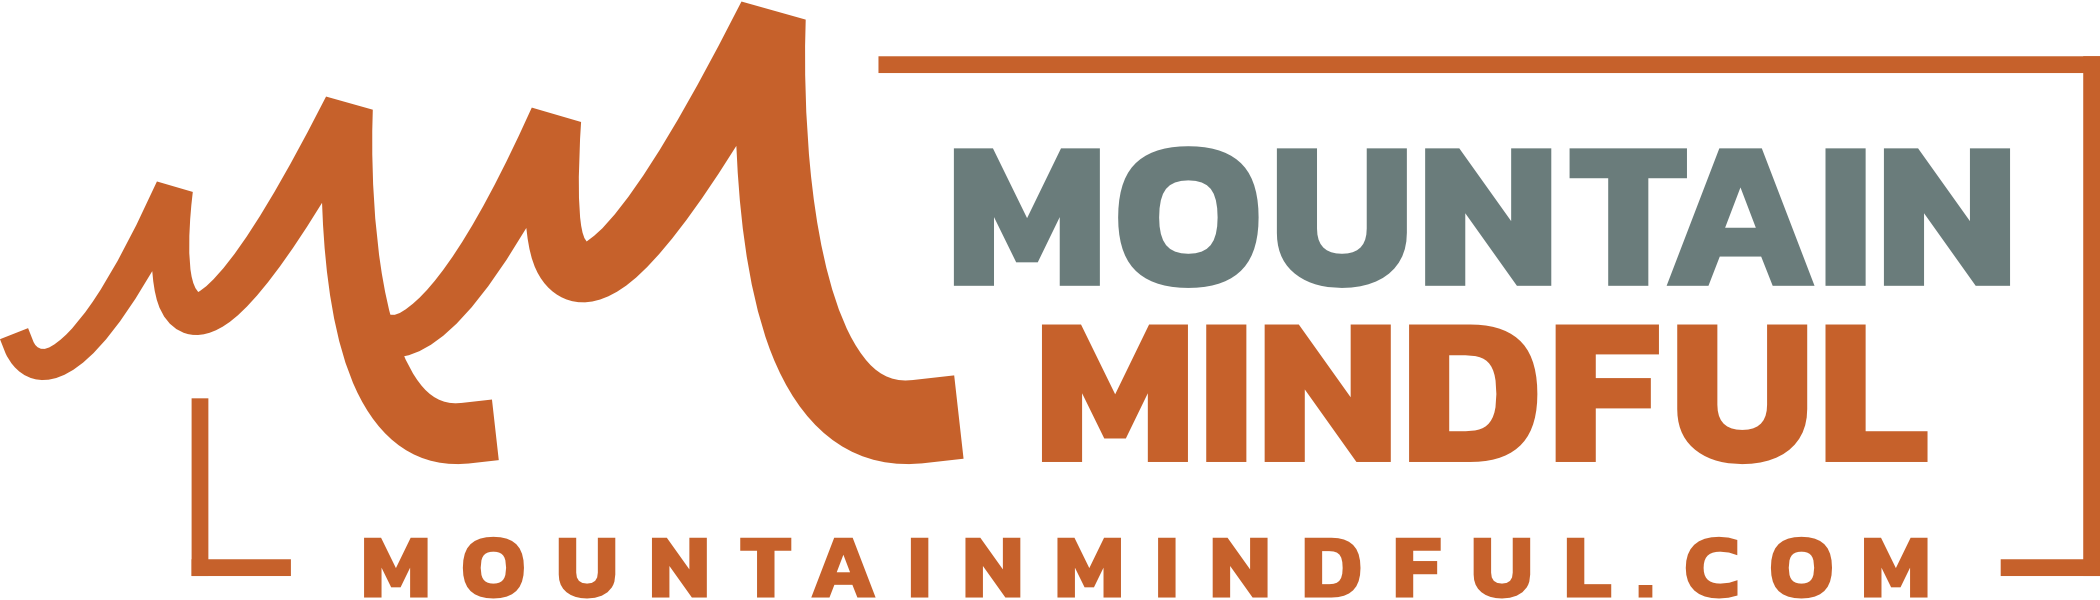 Mountain Mindful